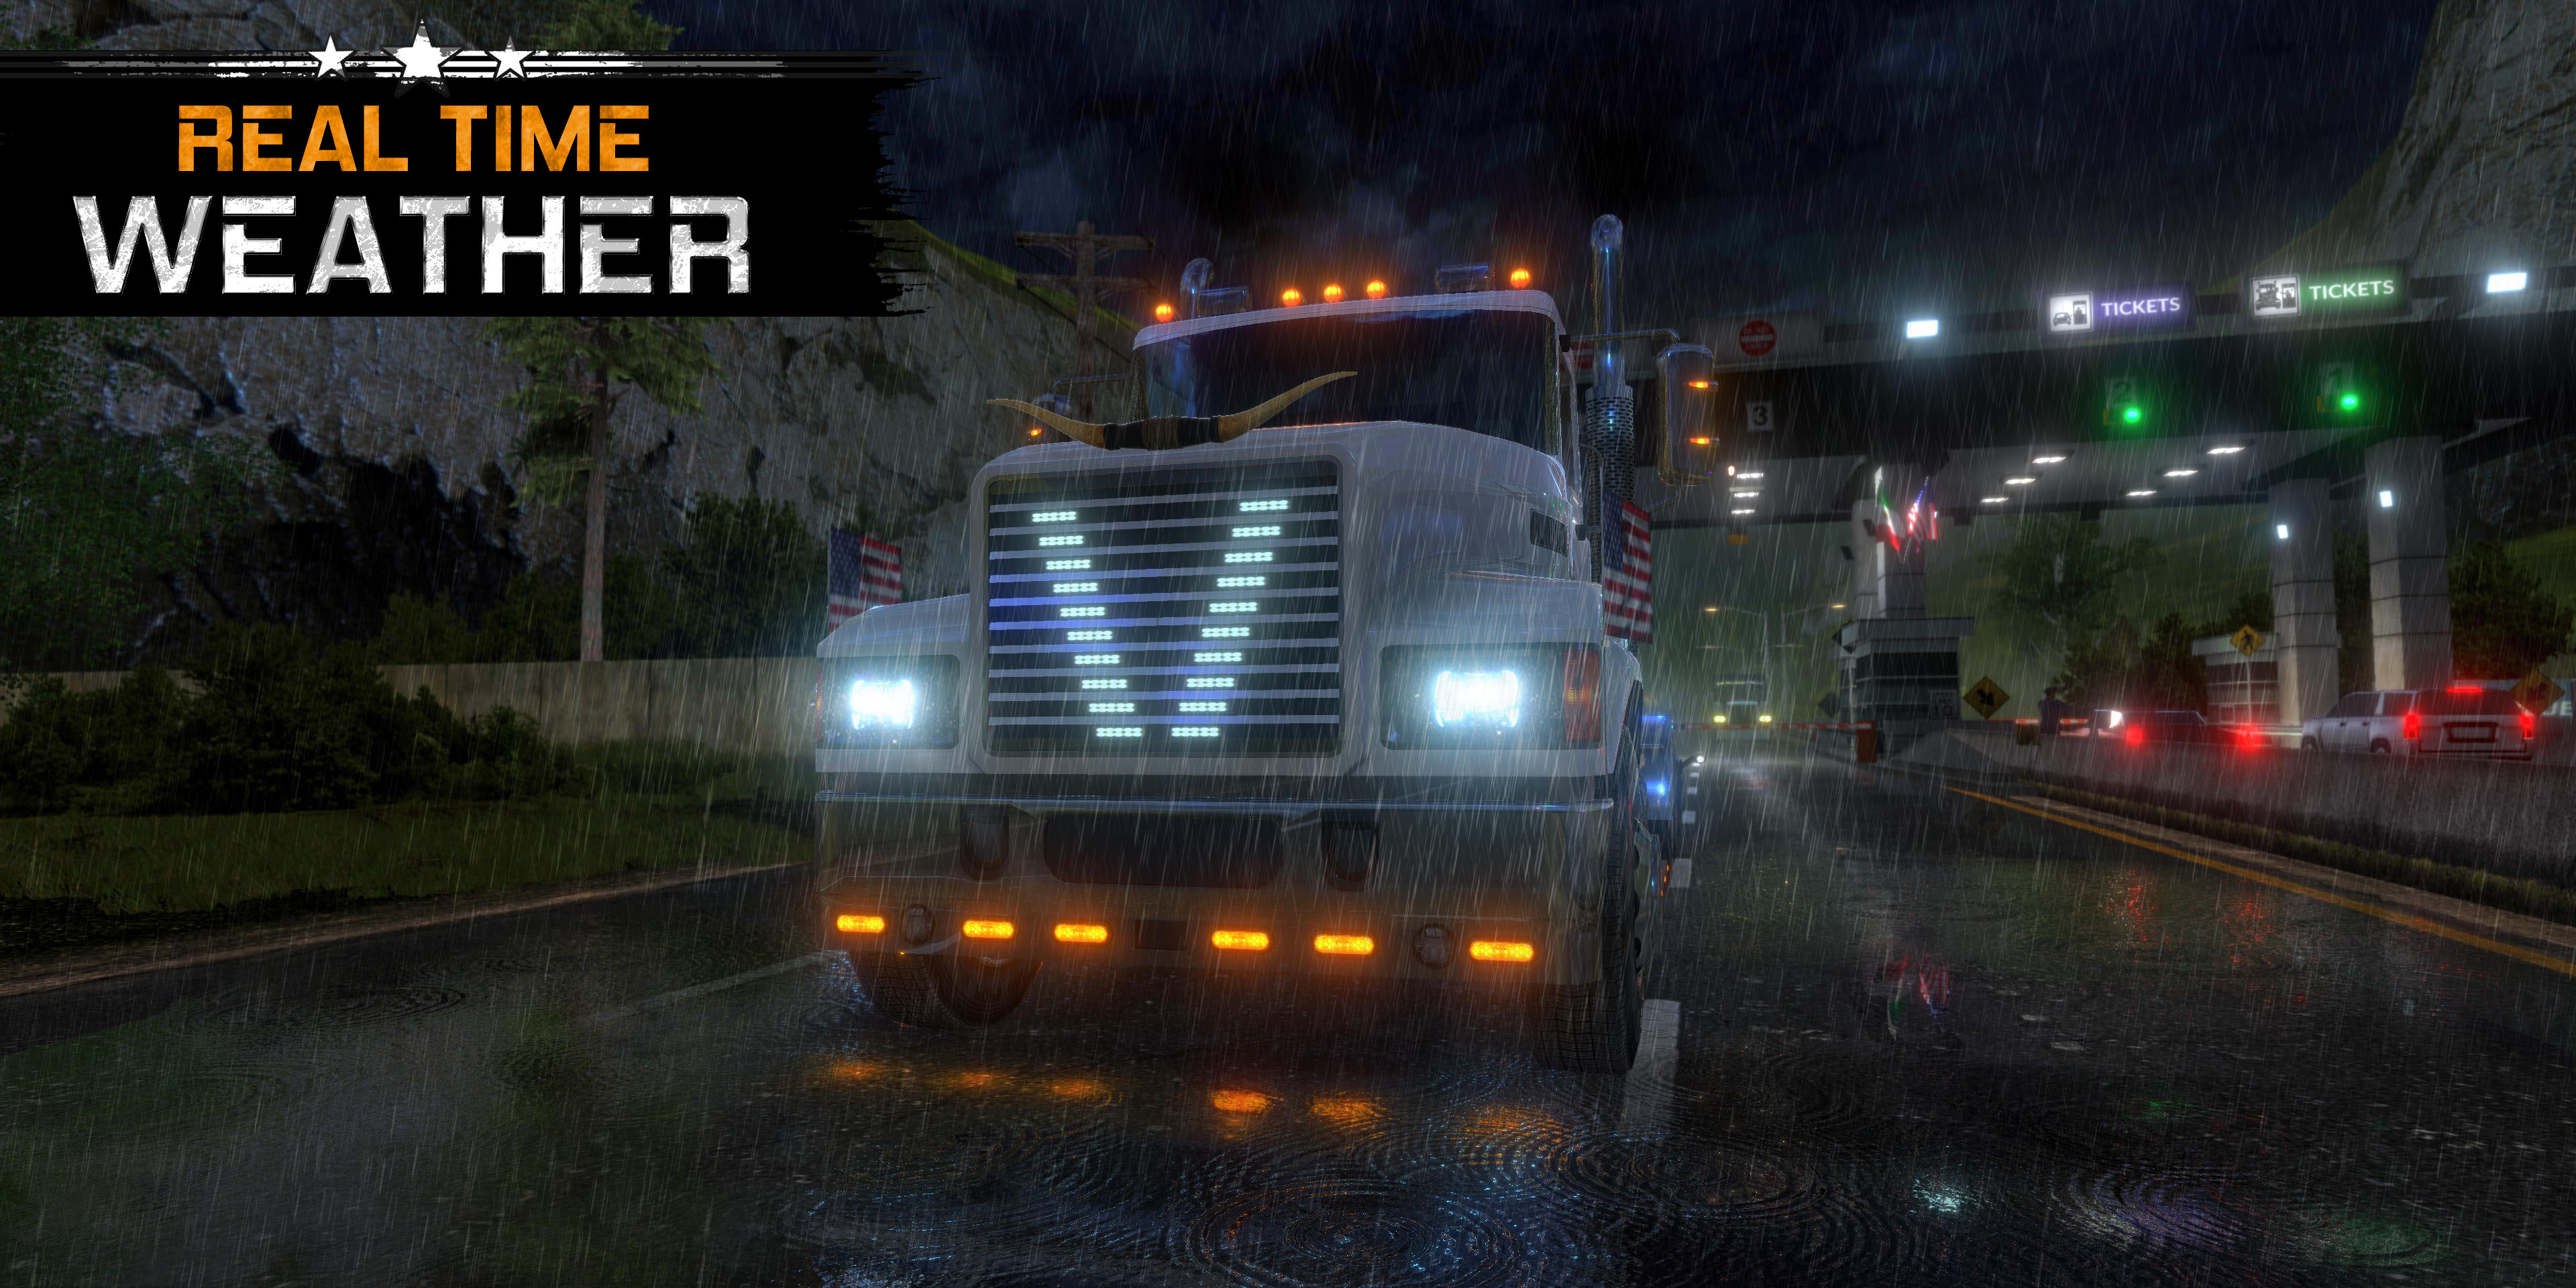 Screenshot of Truck Simulator USA Revolution